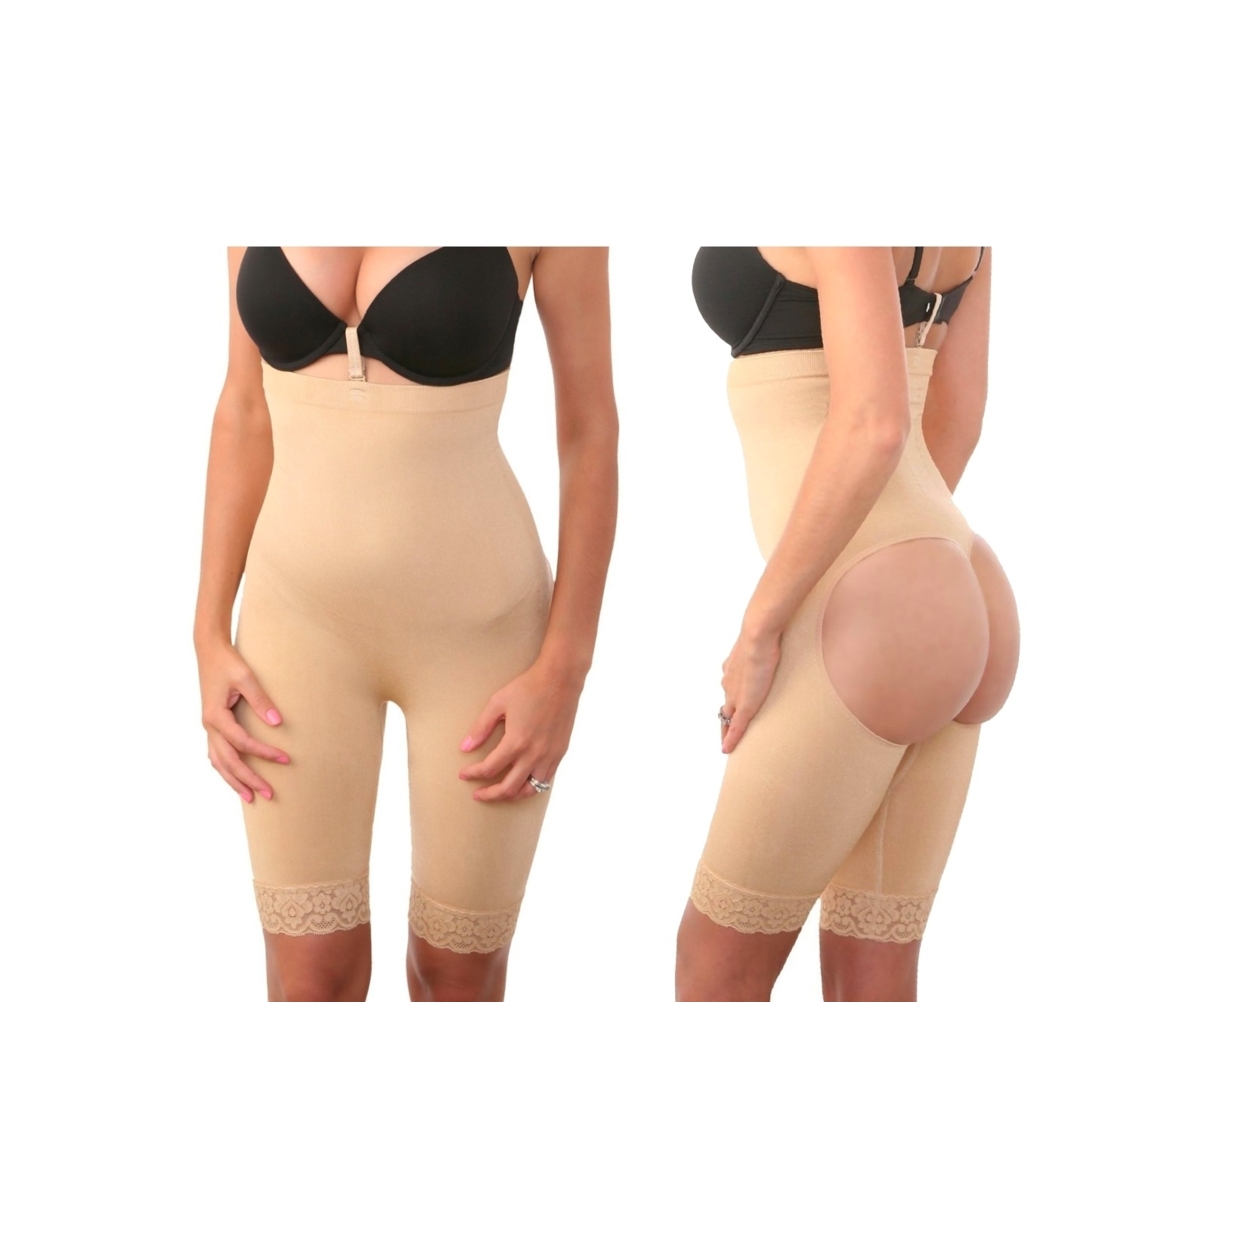 Women's Butt Uplifting Control Shaper - Black, S/M